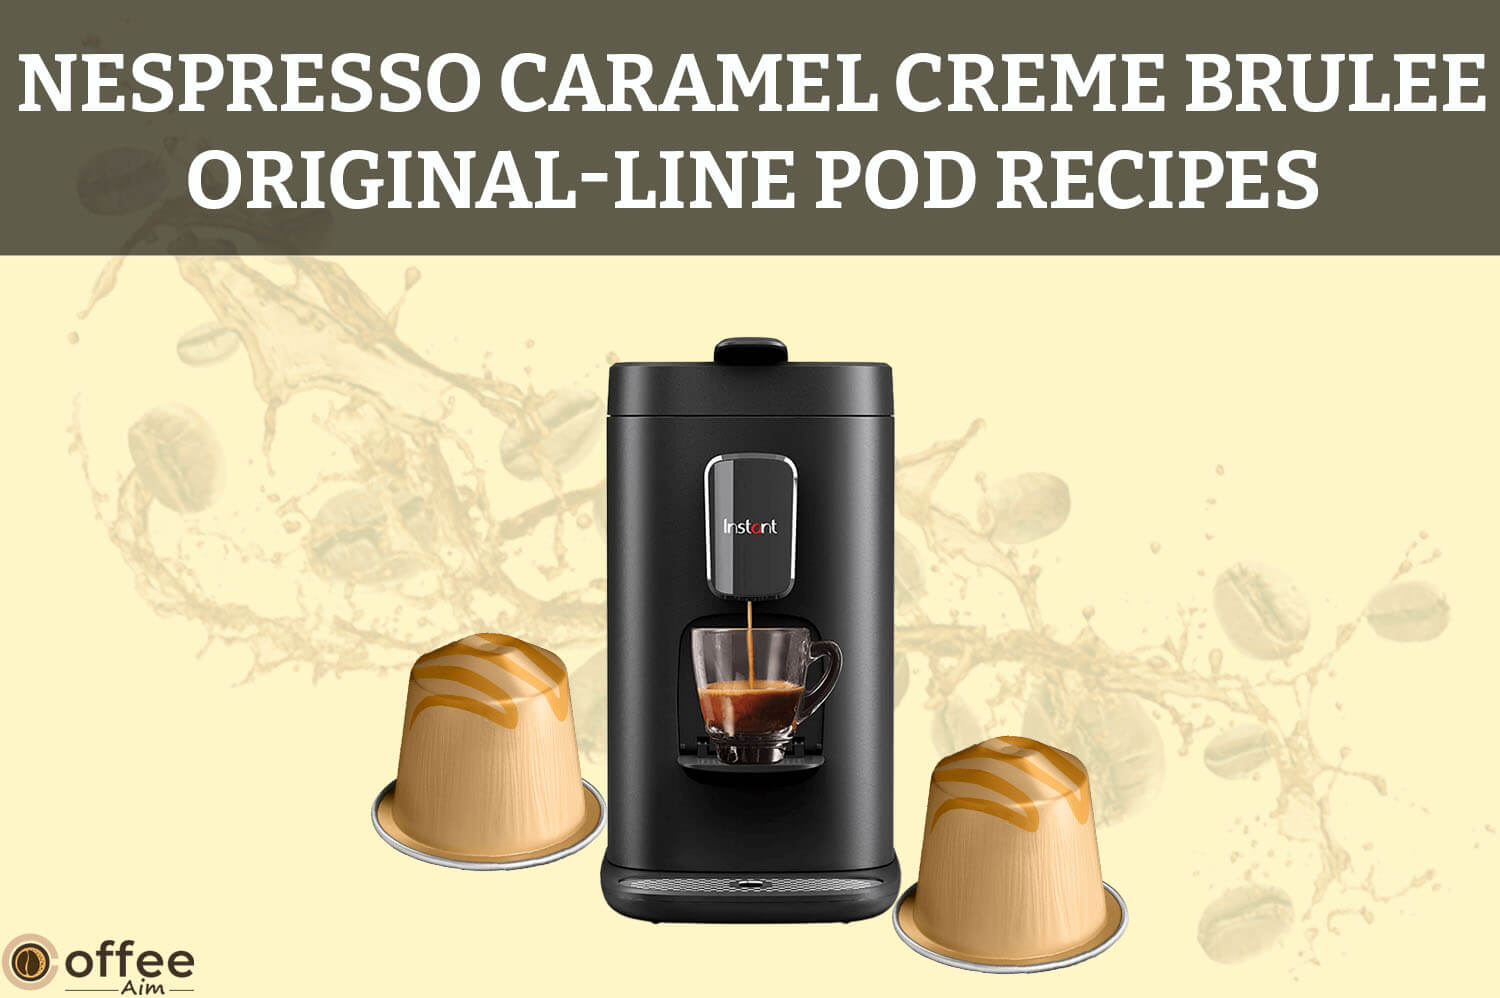 Featured image for the article "Nespresso Caramel Creme Brulee Original-Line Pod Recipes"